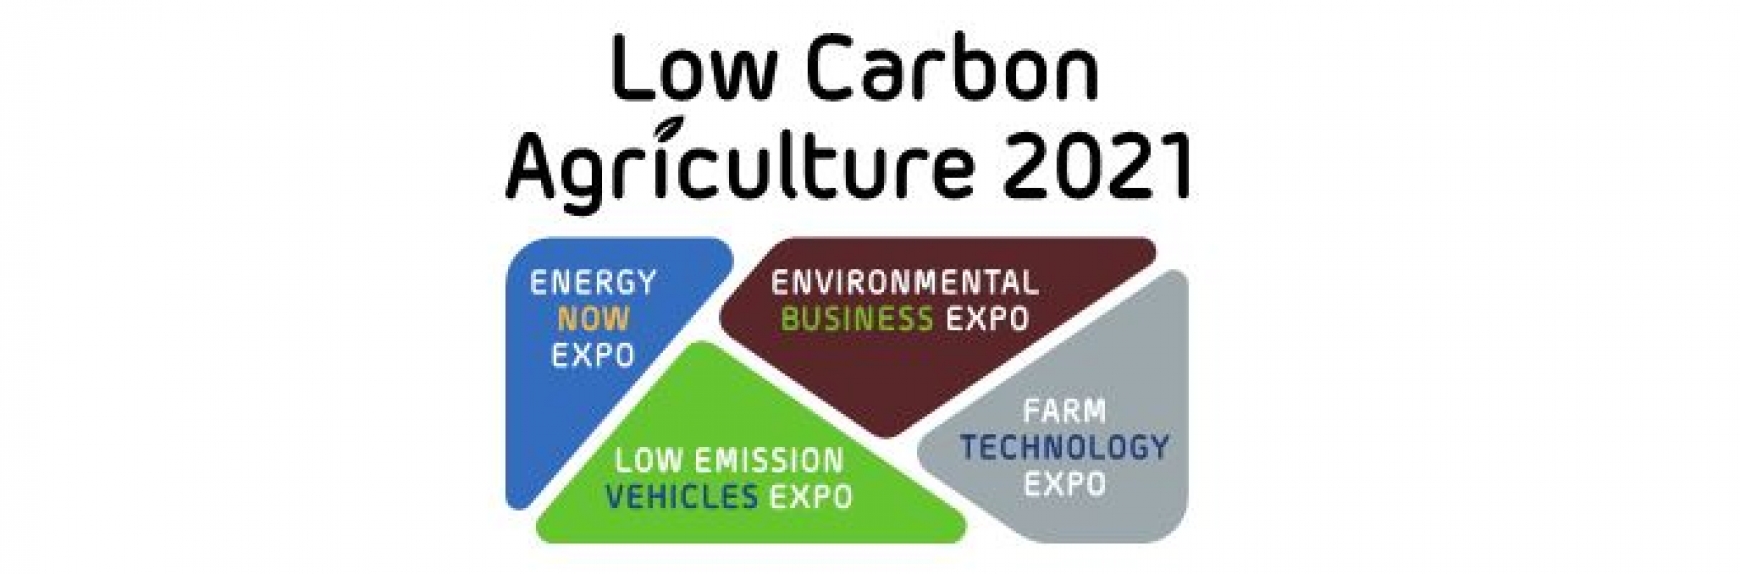 Low Carbon Agriculture event logo